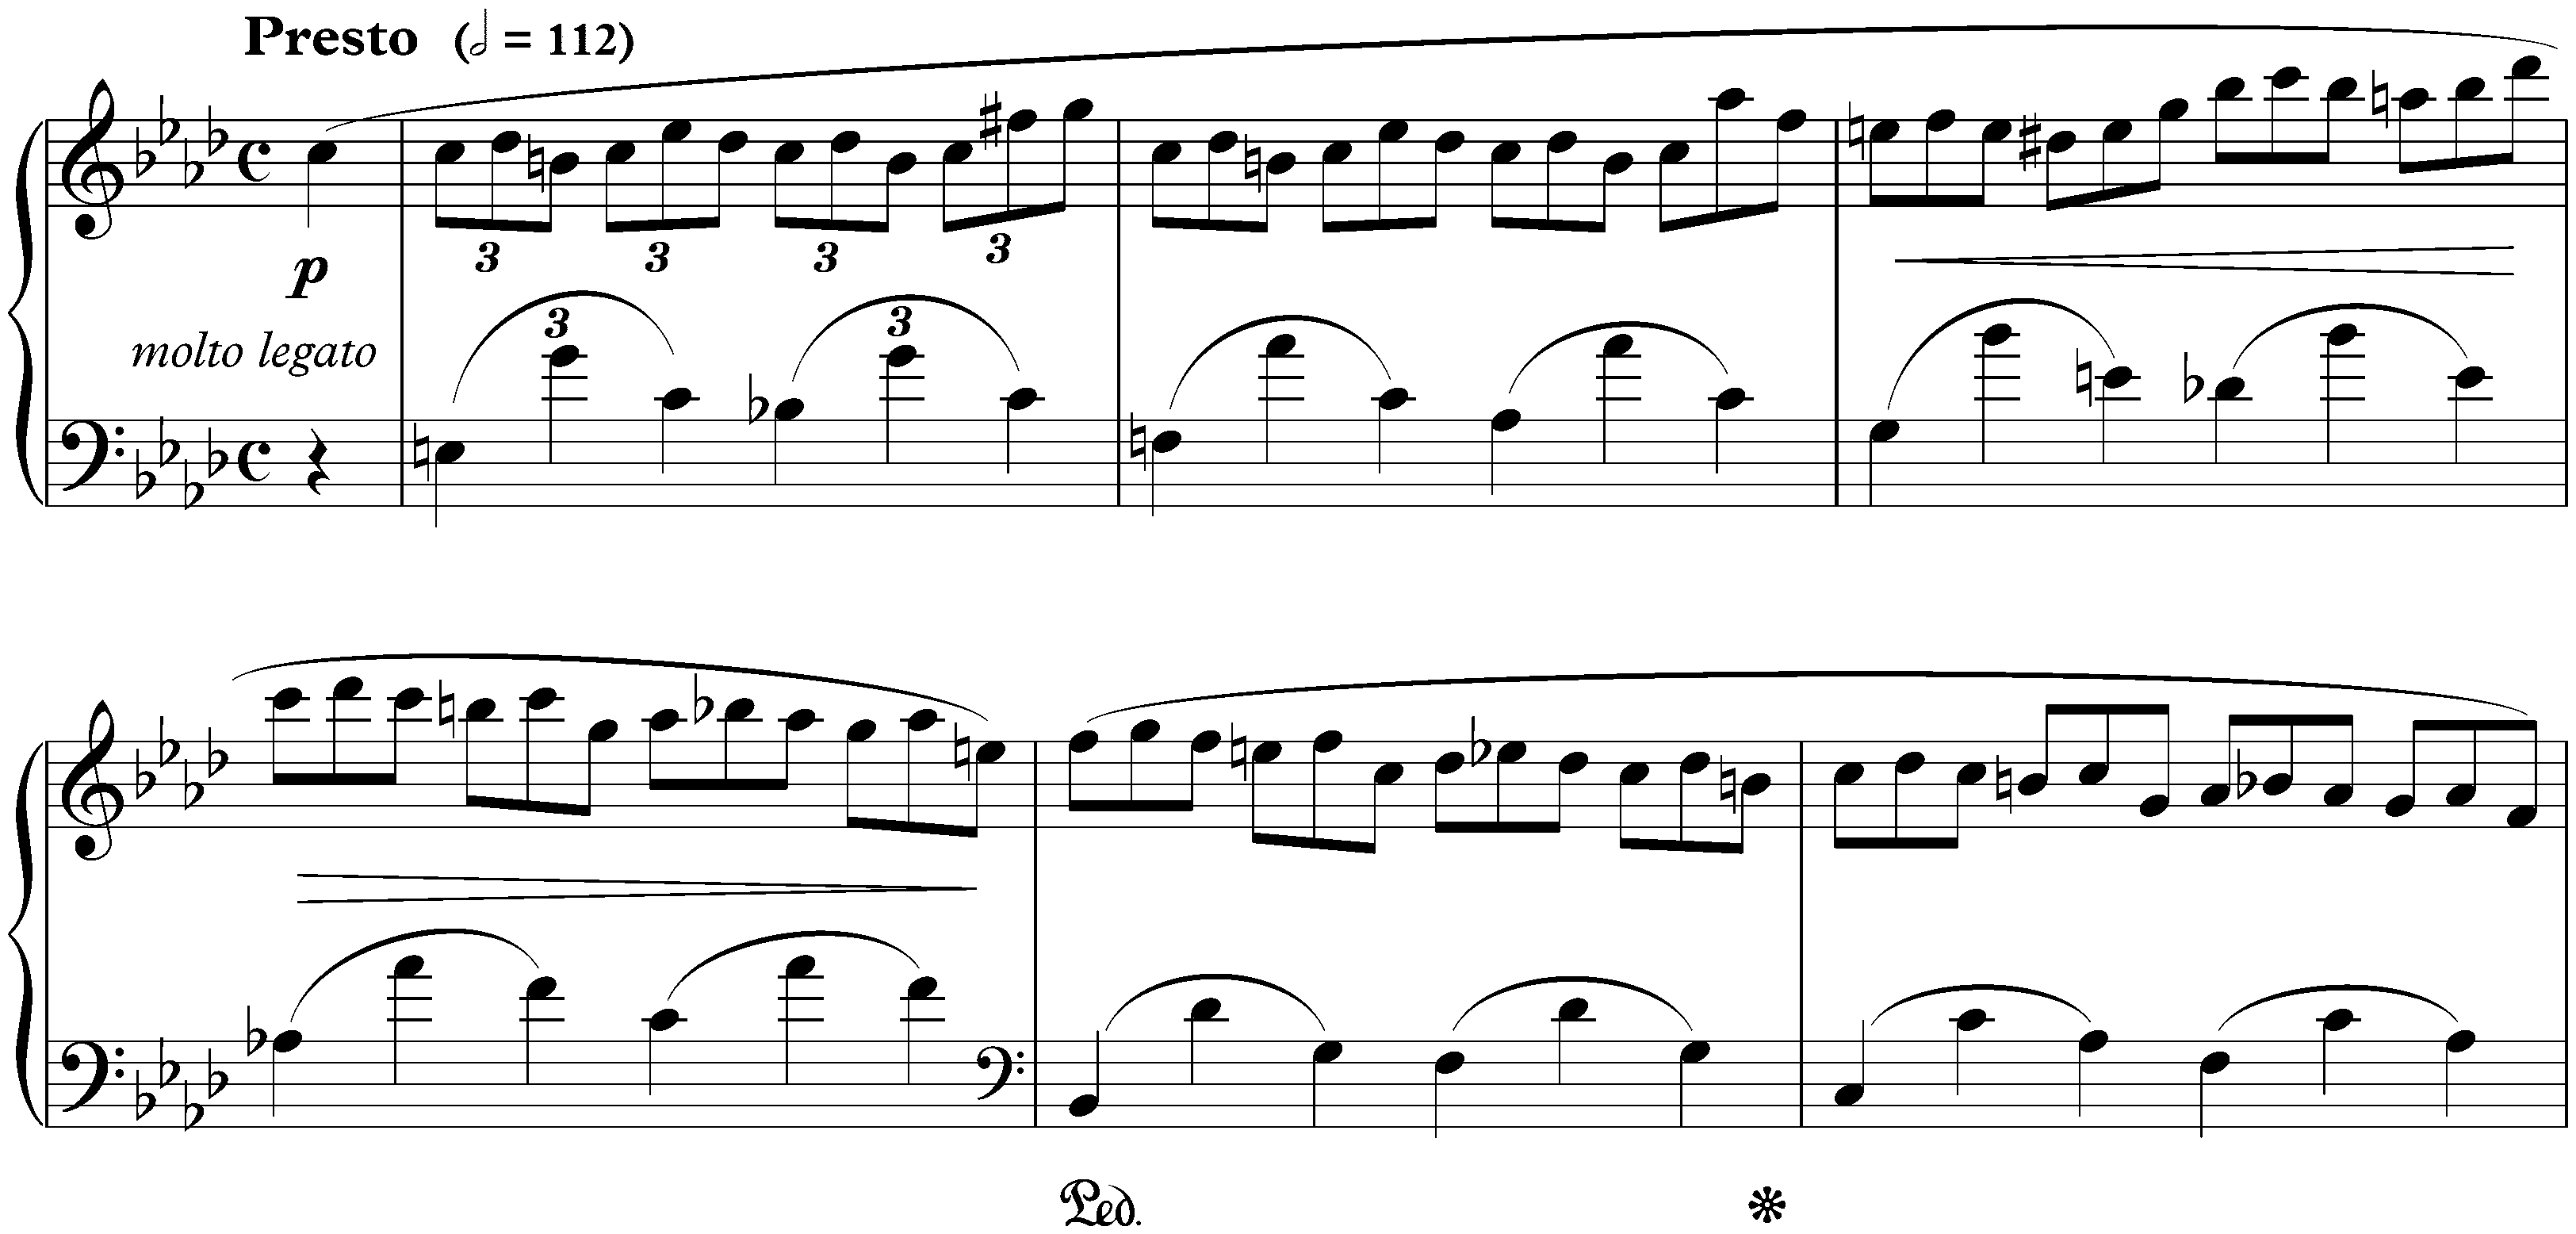 Twelve Études, op. 25; 2. F minor